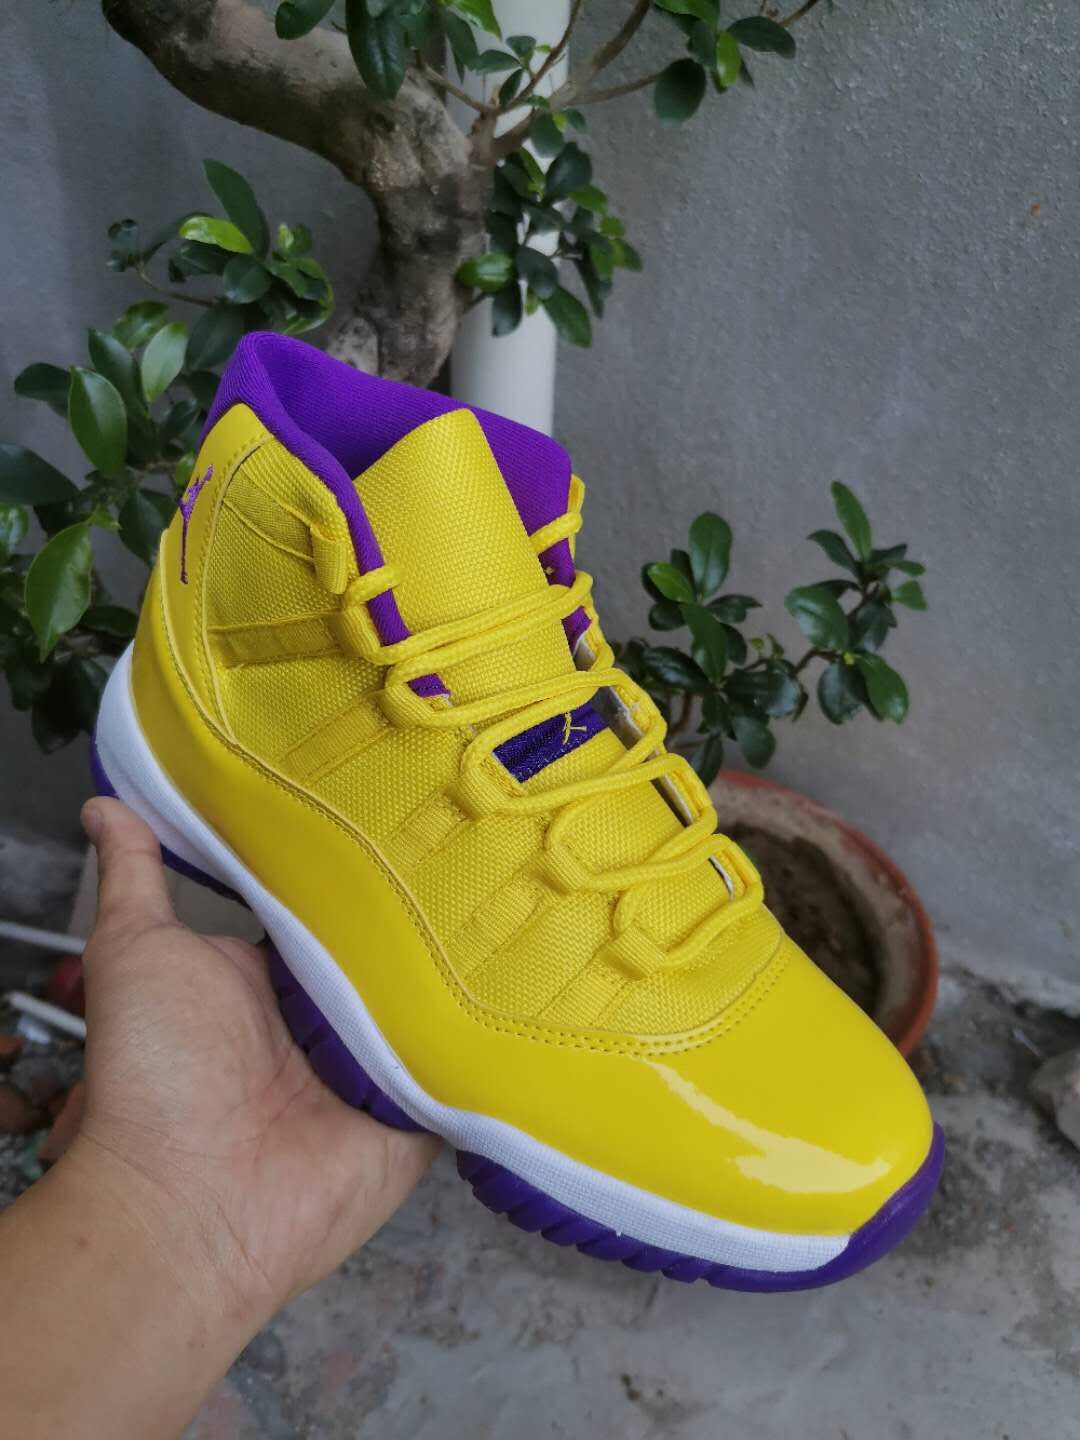 purple and yellow jordan 11